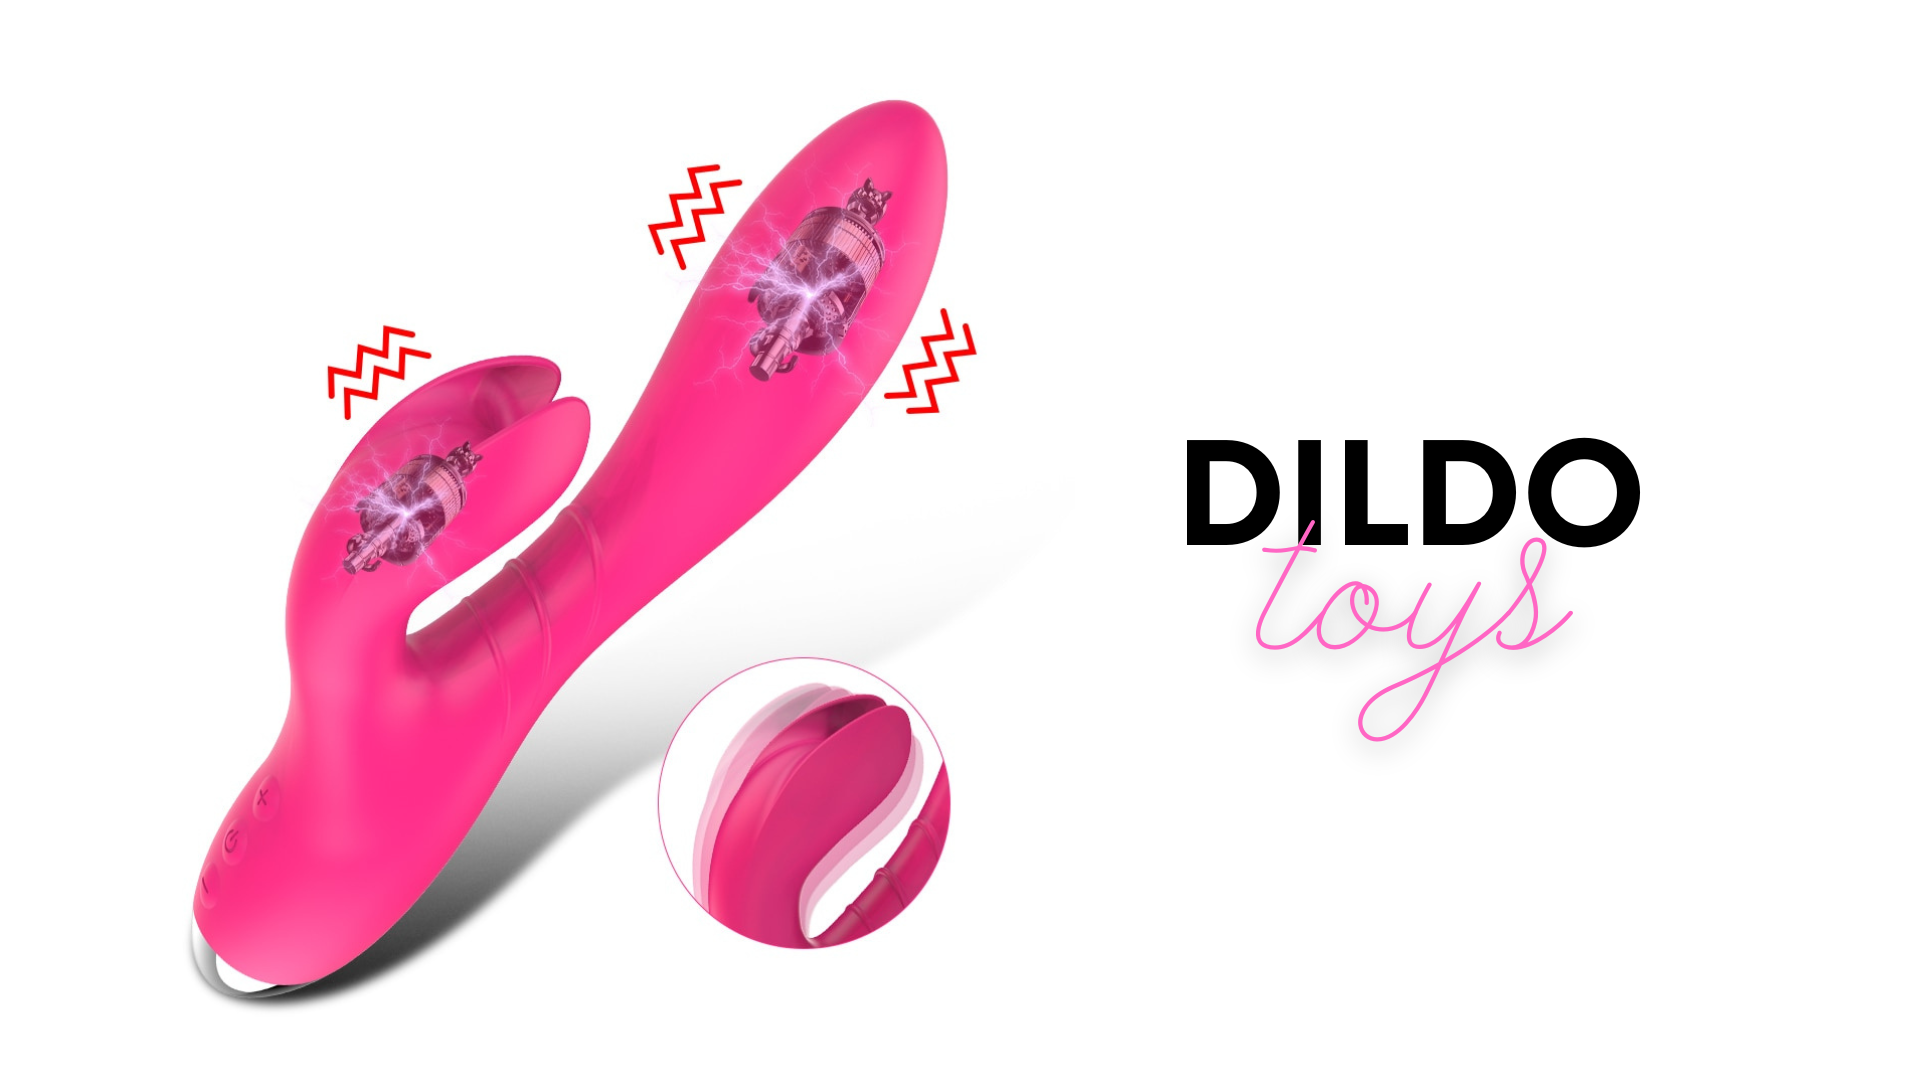 A pink Dildos